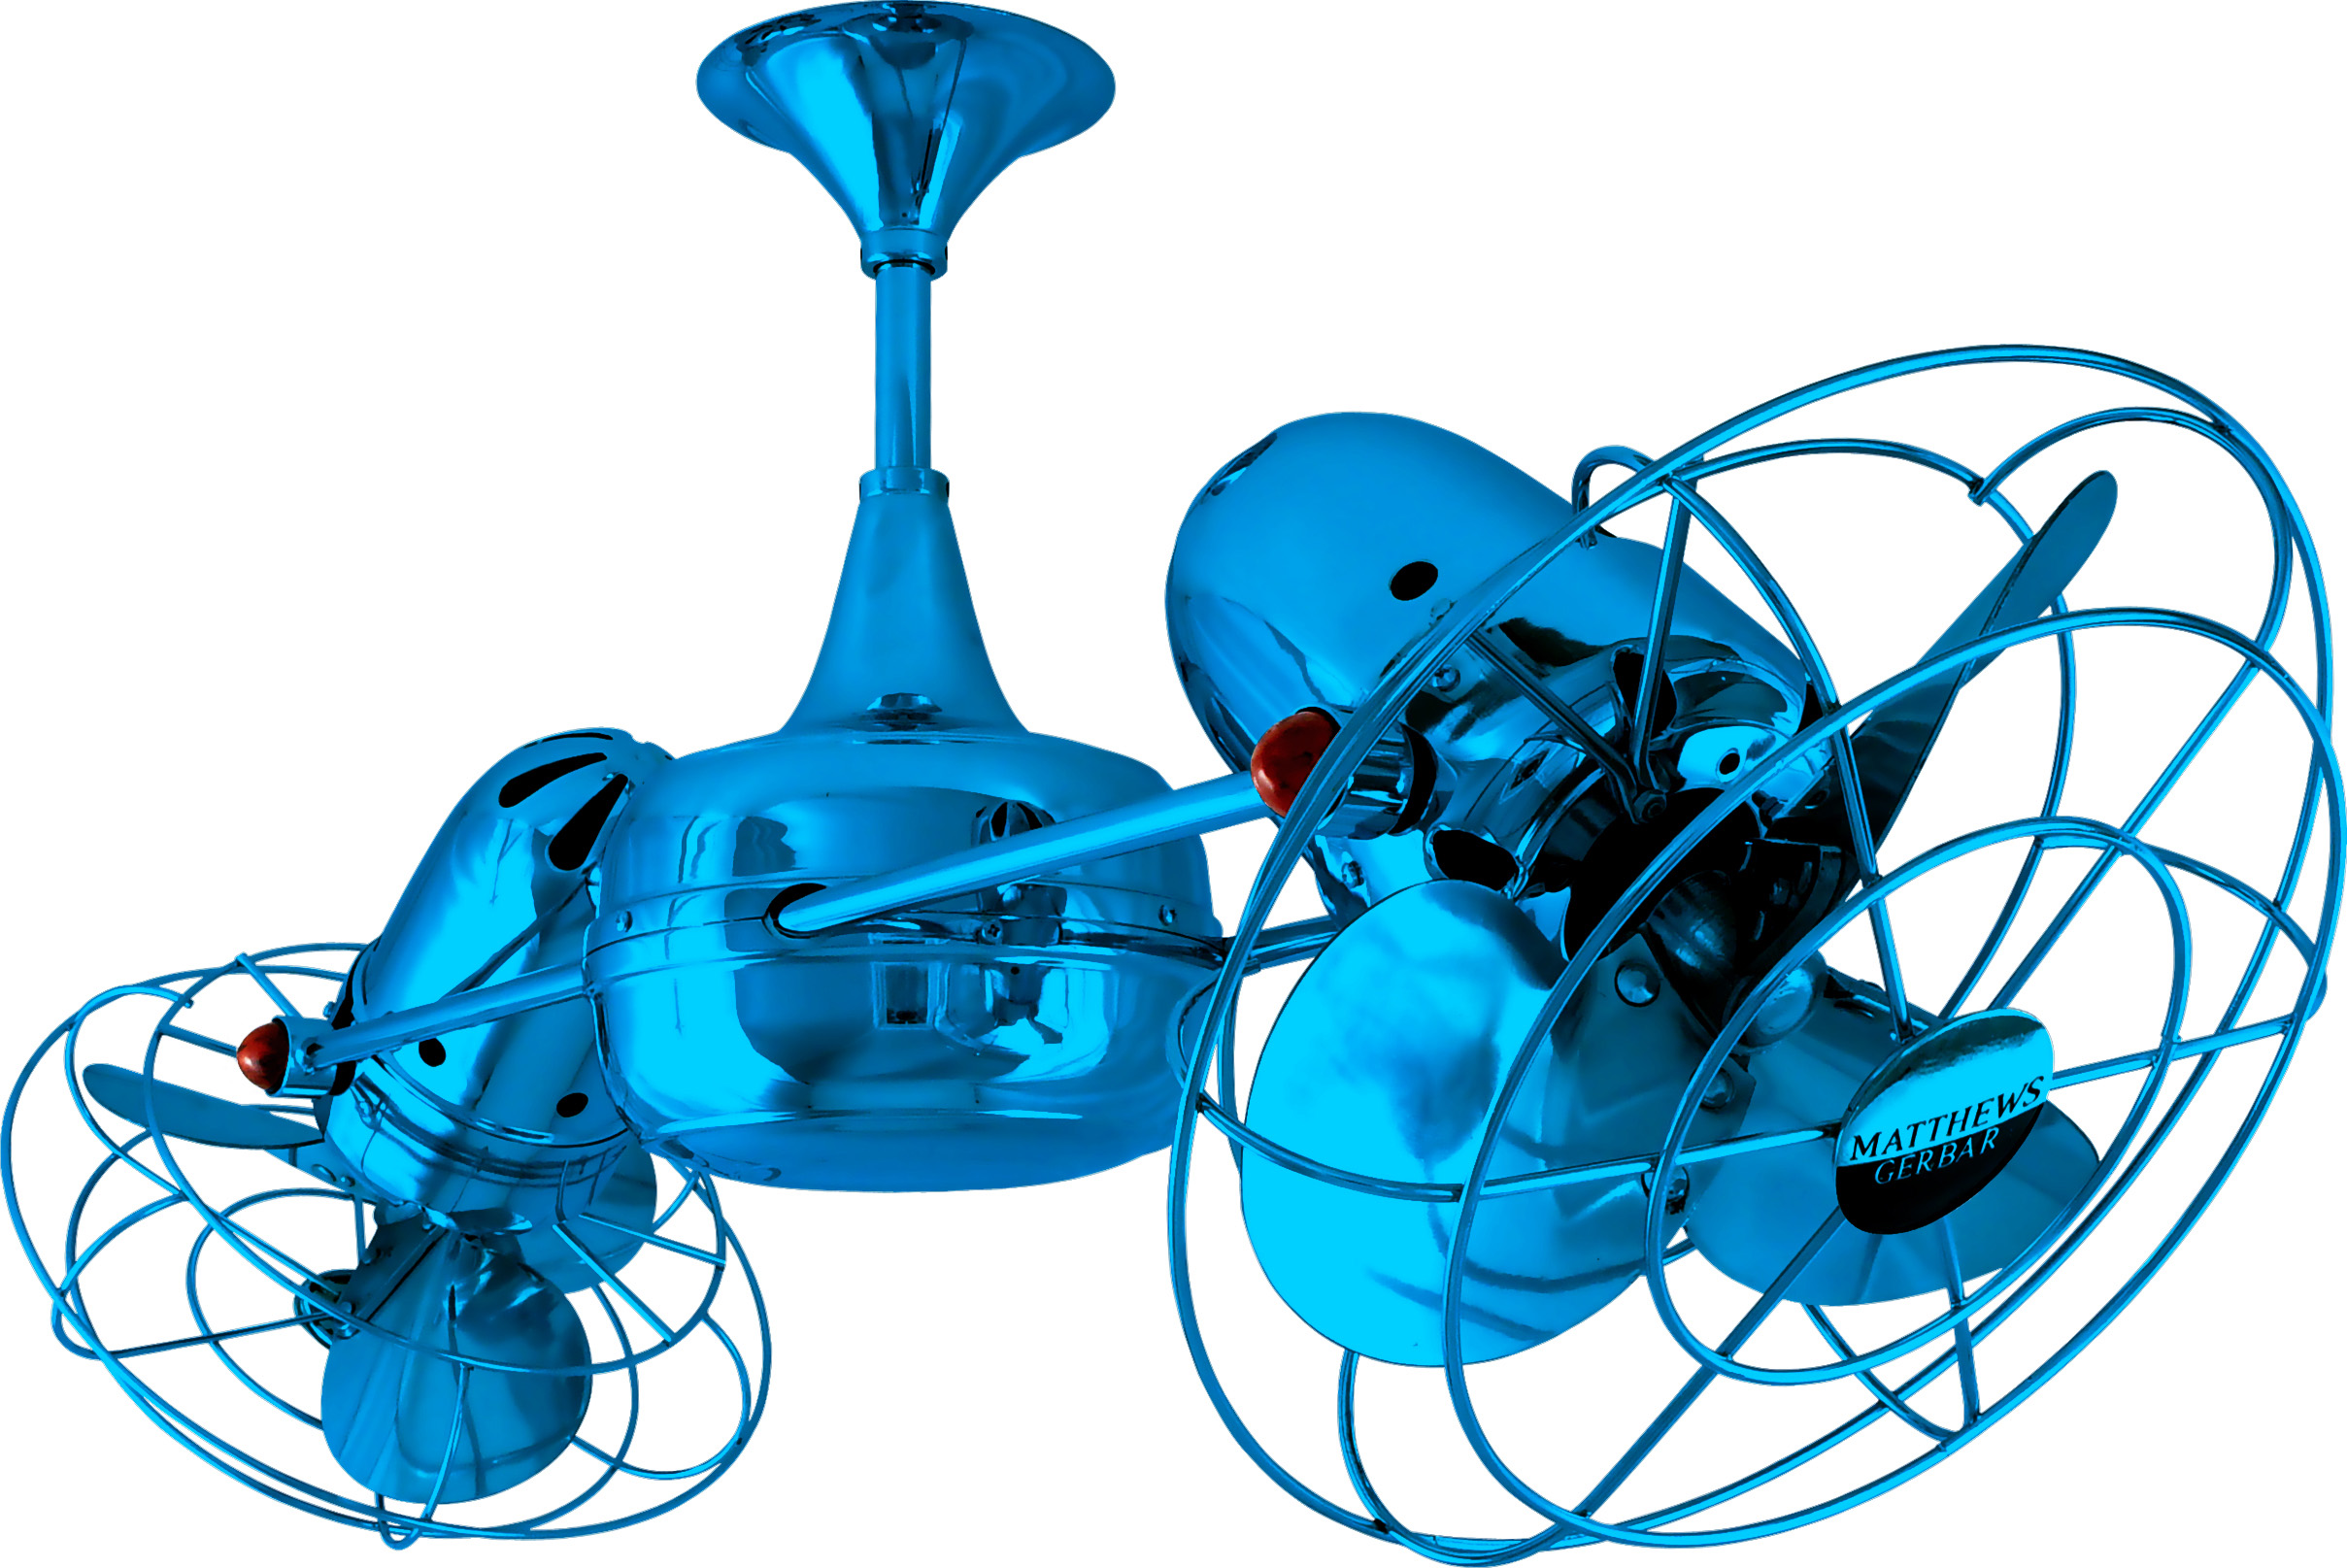 Duplo Dinamico Rotational Dual Head Ceiling Fan in Agua Marinha / Light Blue Finish with Metal Blades